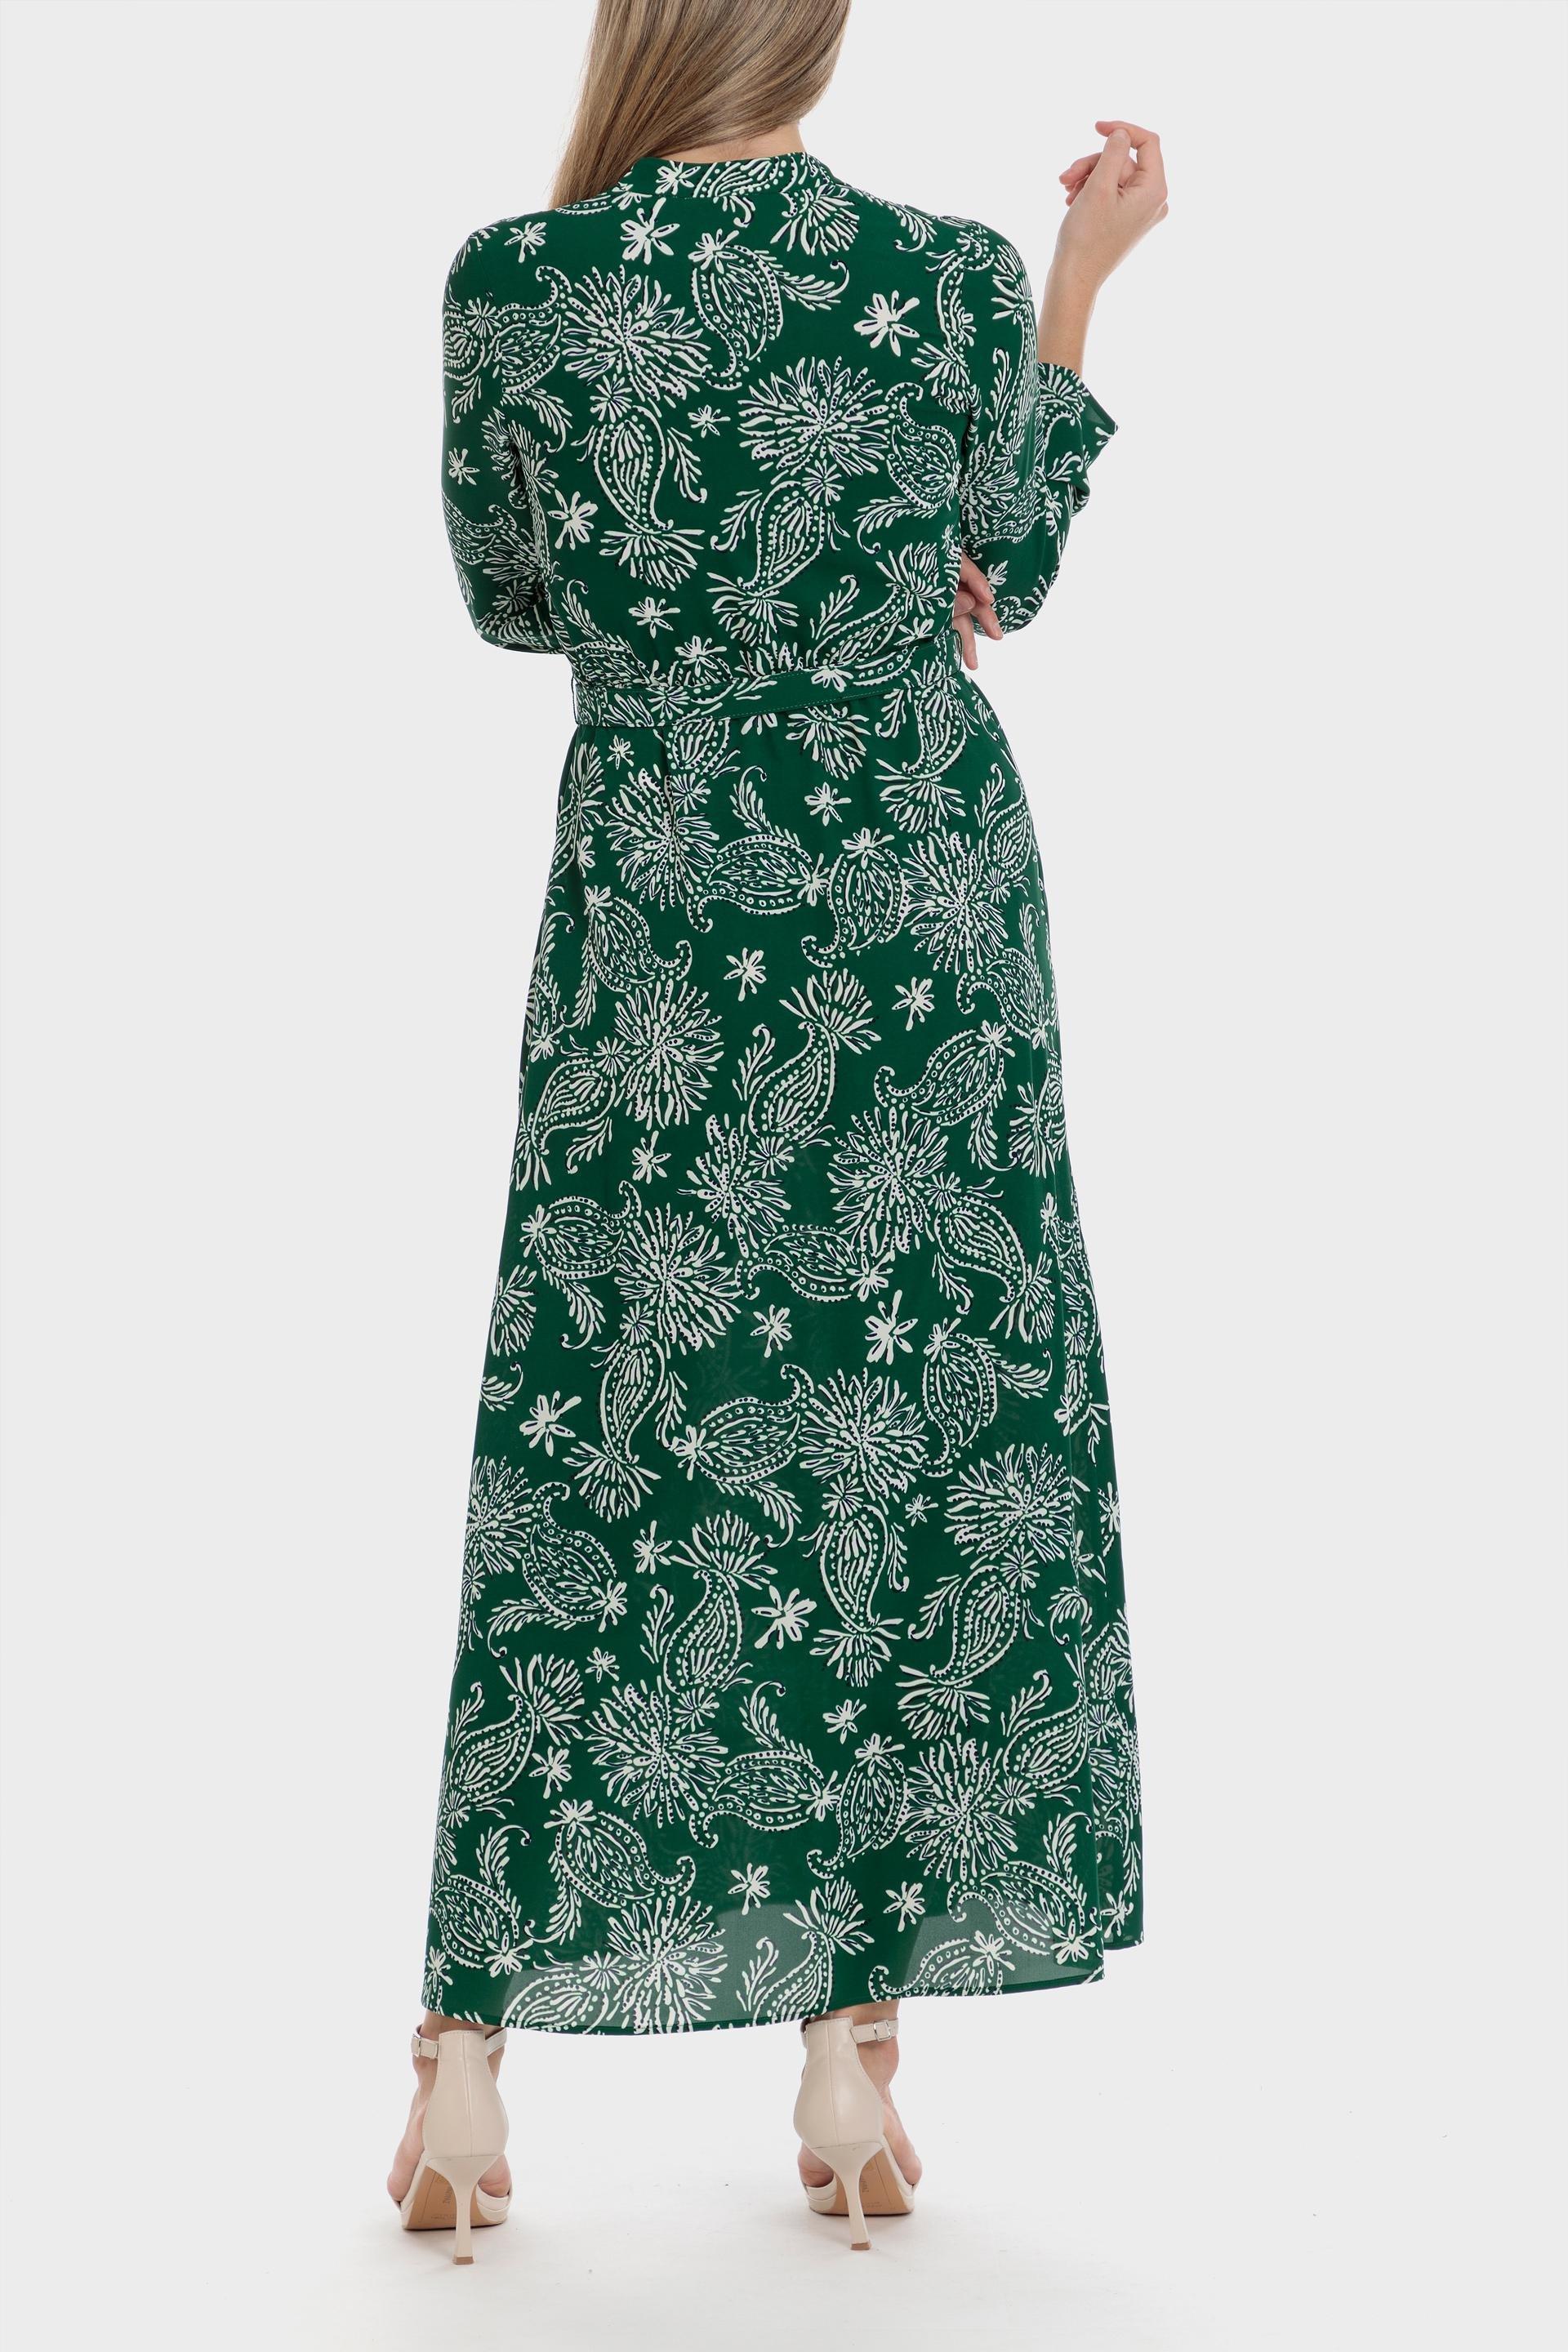 Punt Roma - Green Printed Dress